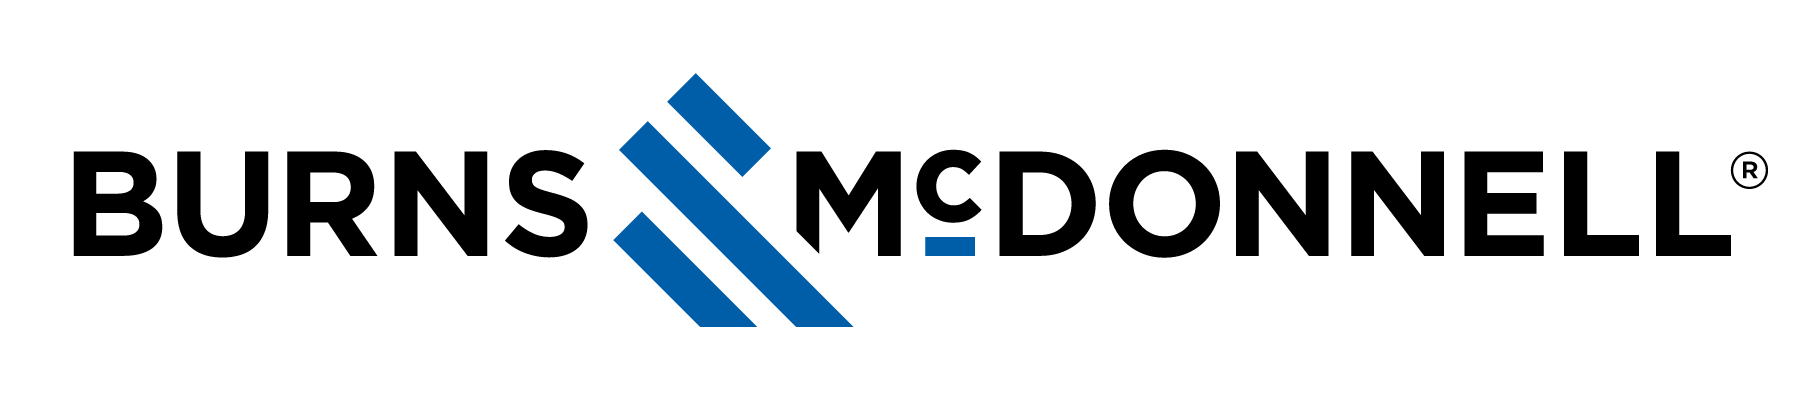 Burns & McDonnell logo